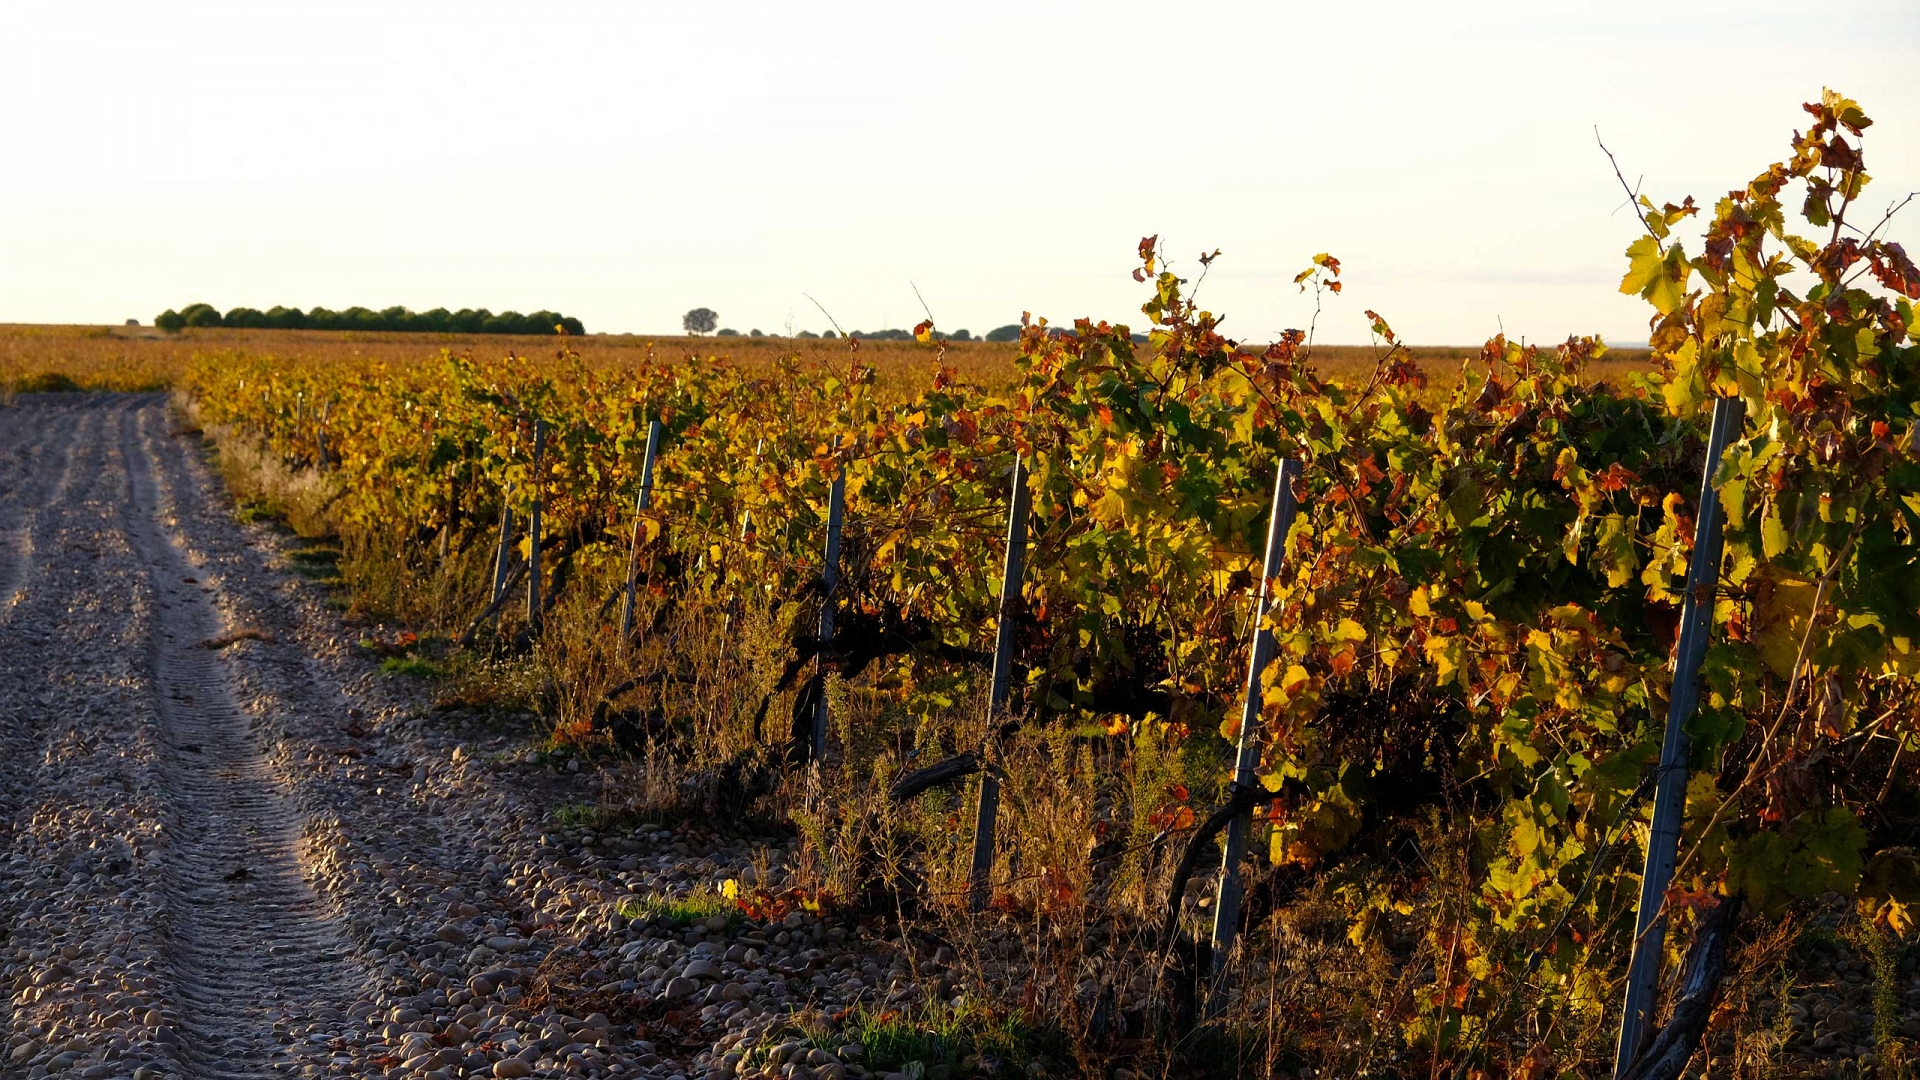 Pago de Fuente Elvira: a ‘vineyard of vineyards’ steeped in history